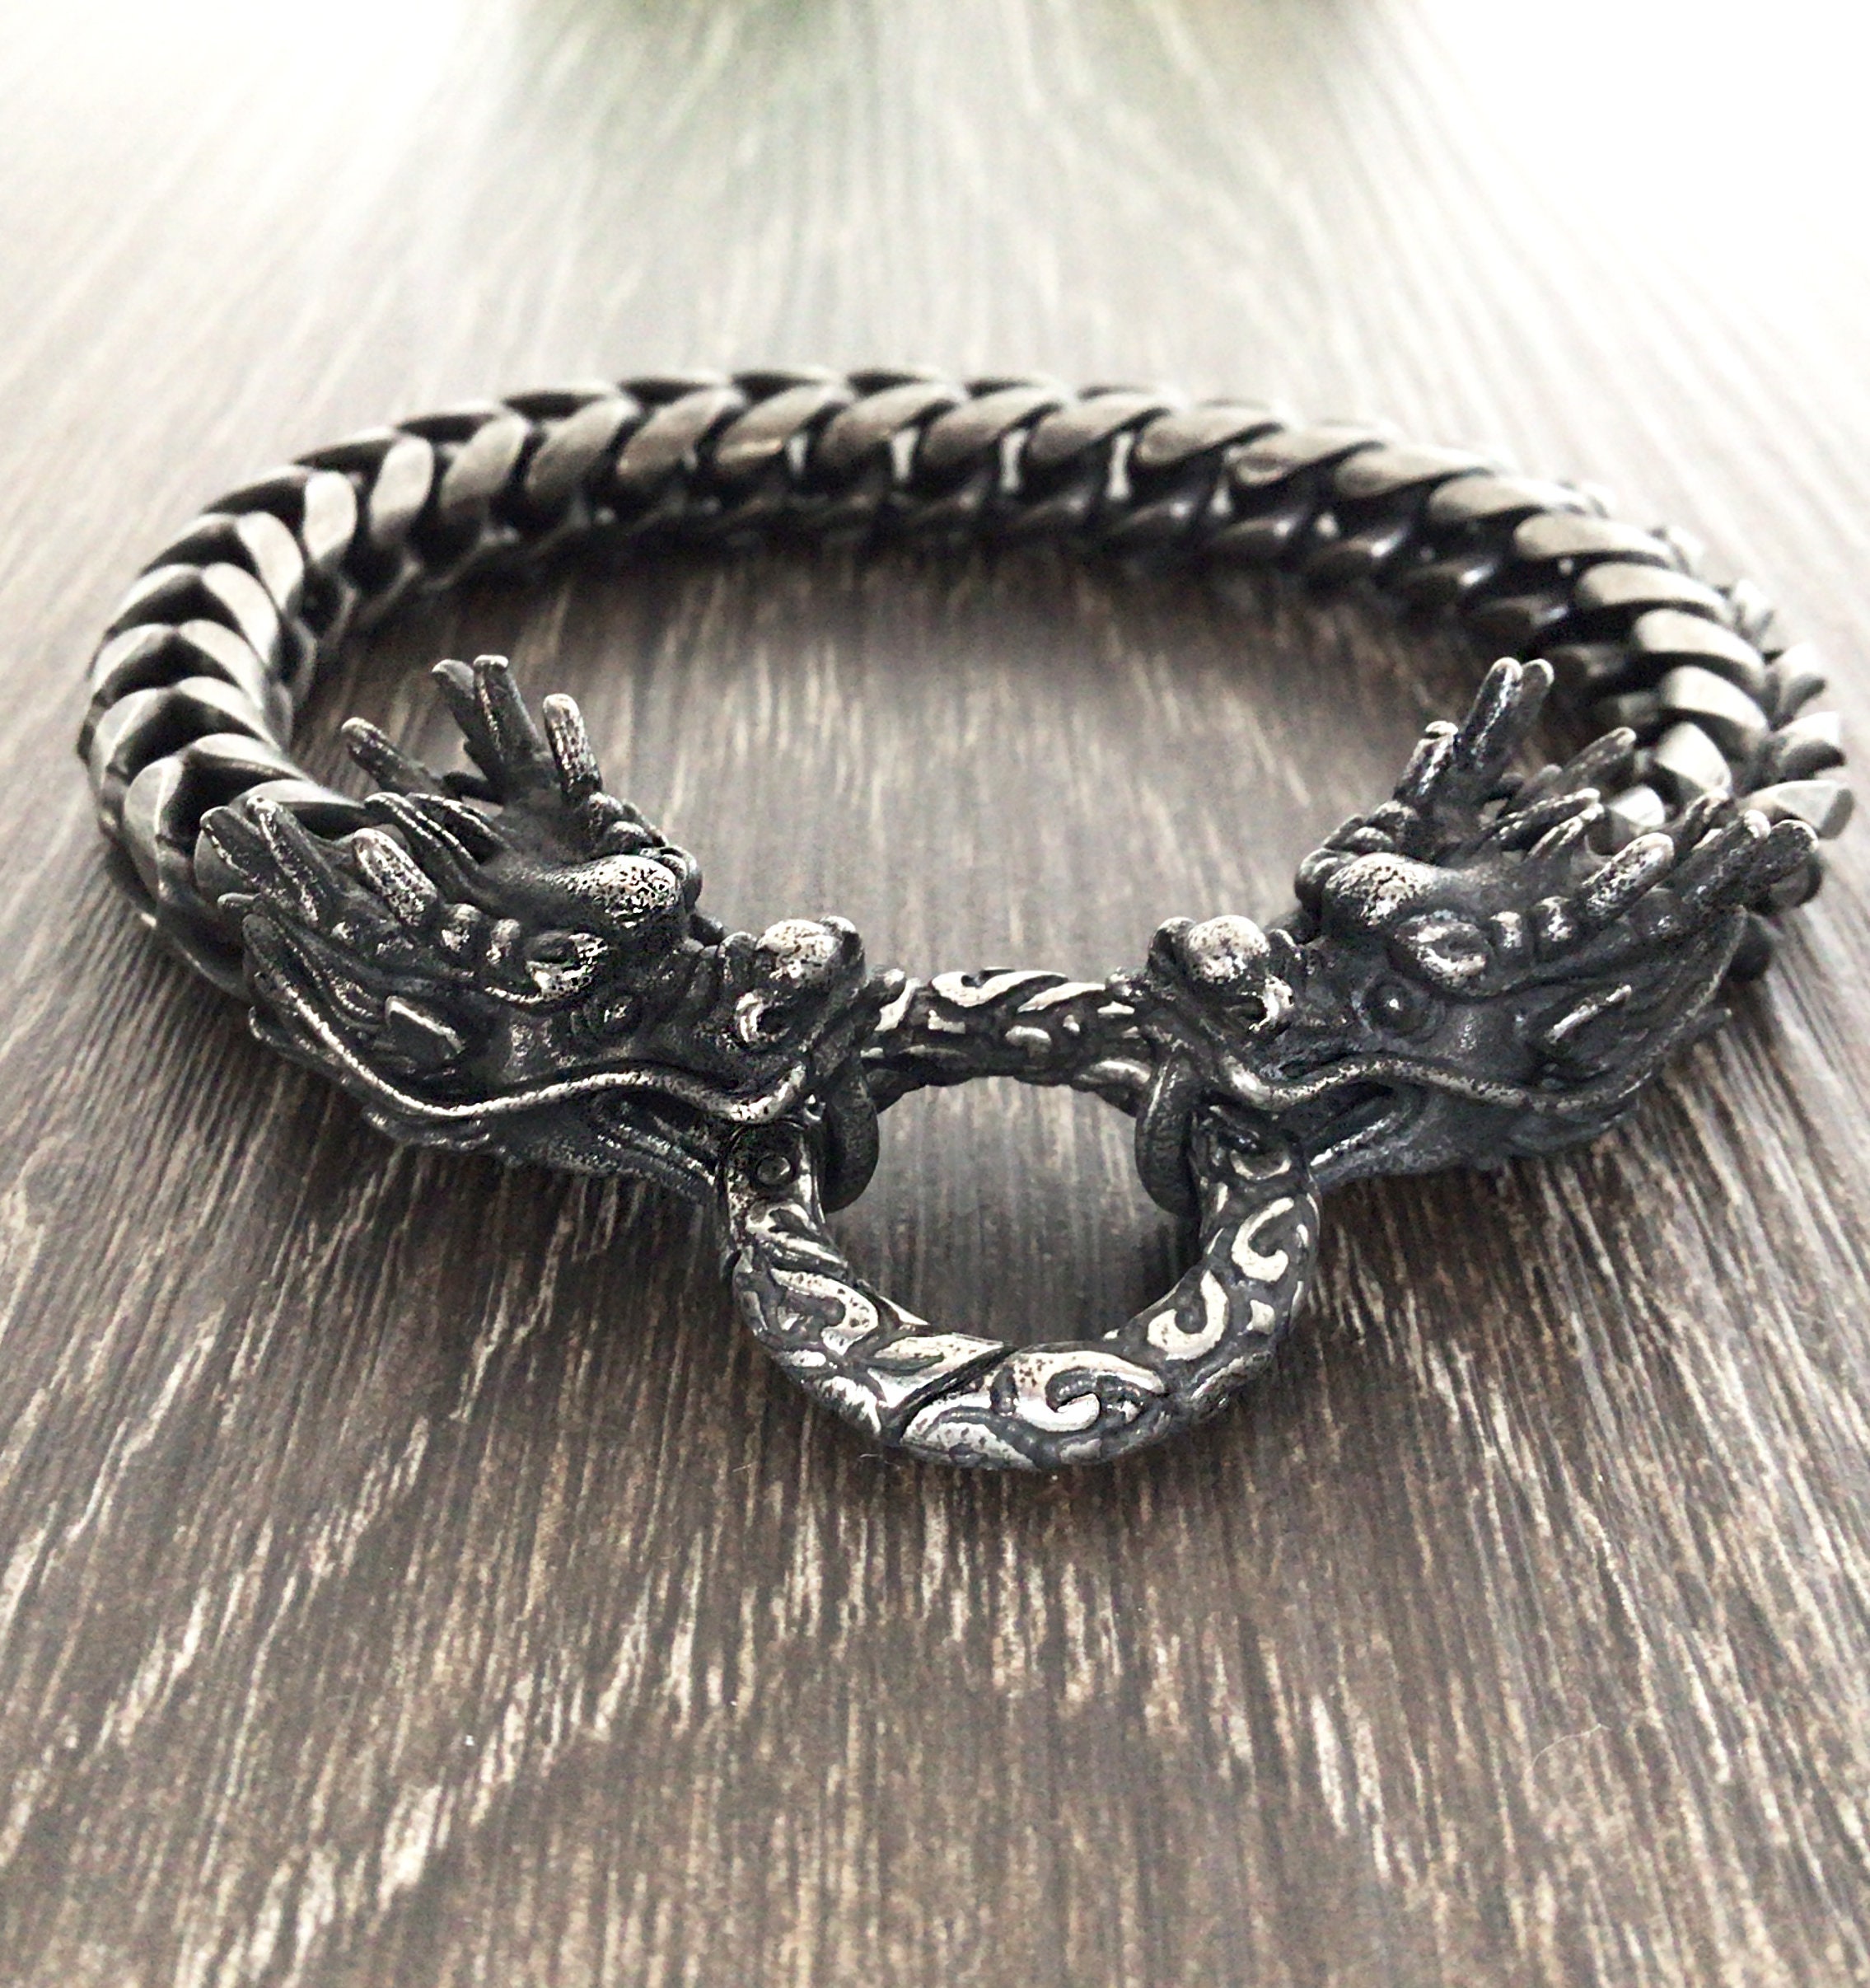 Stainless Steel Dragon Bracelet Jewelry Fashion Accessories Viking Bracelet  Men | eBay